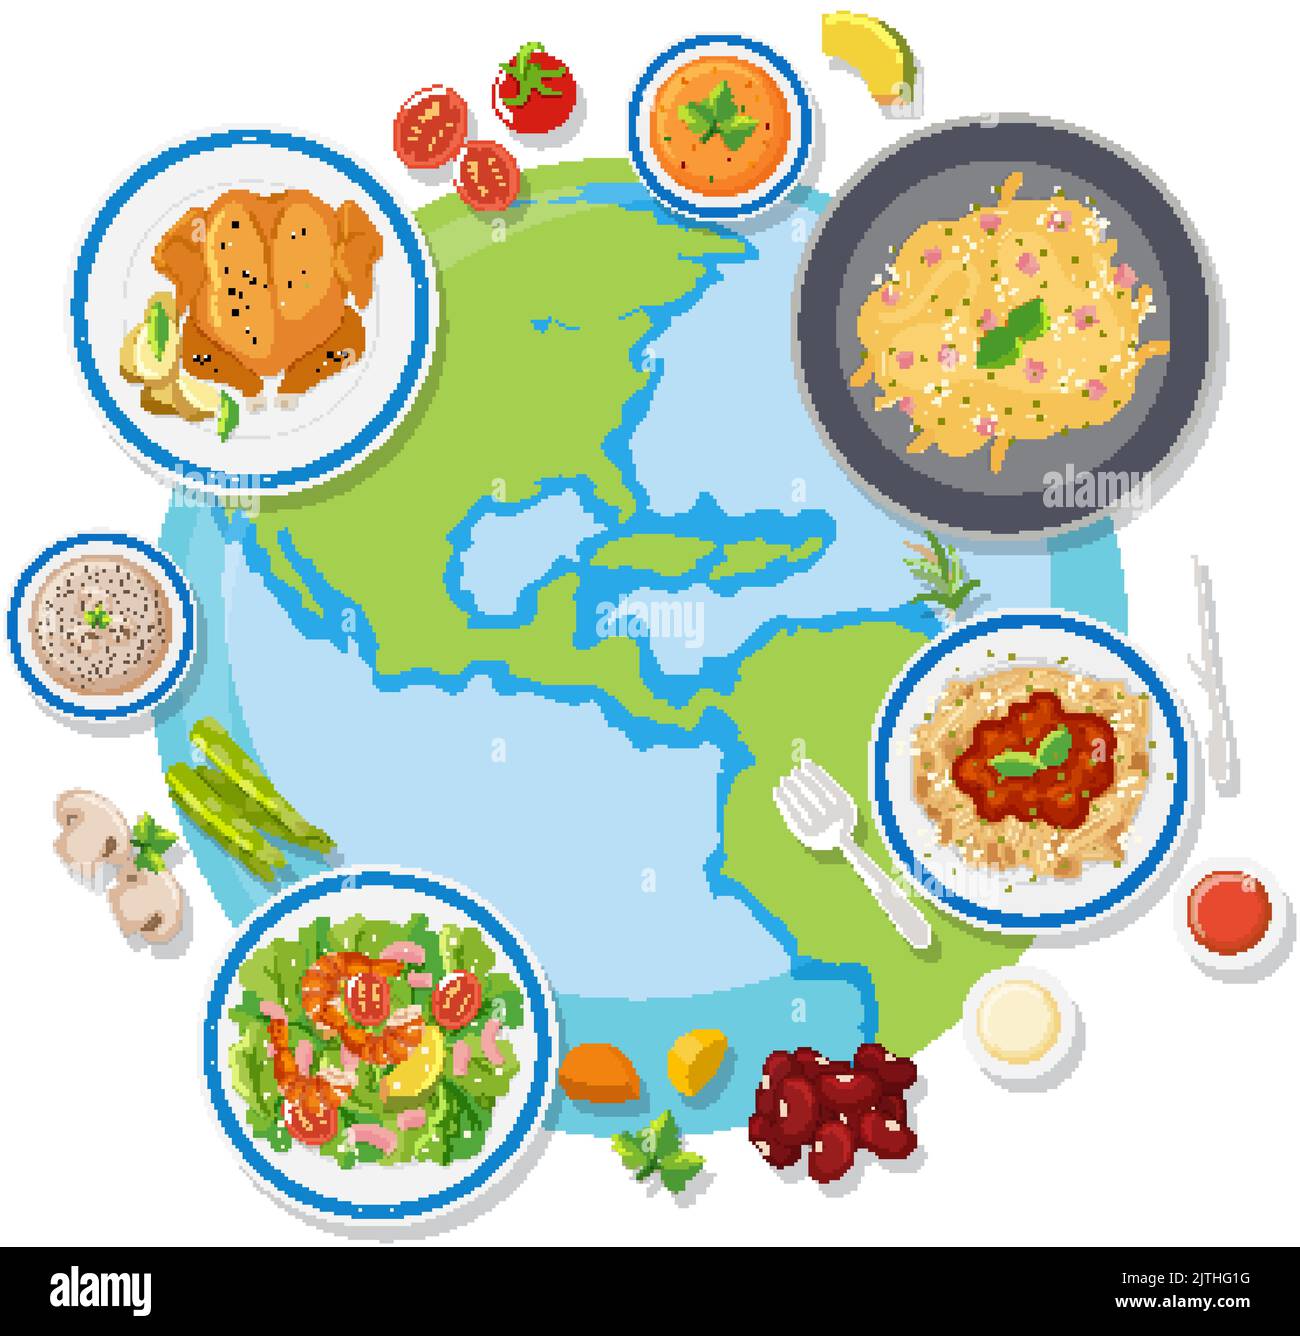 World food day logo concept illustration Stock Vector Image & Art - Alamy